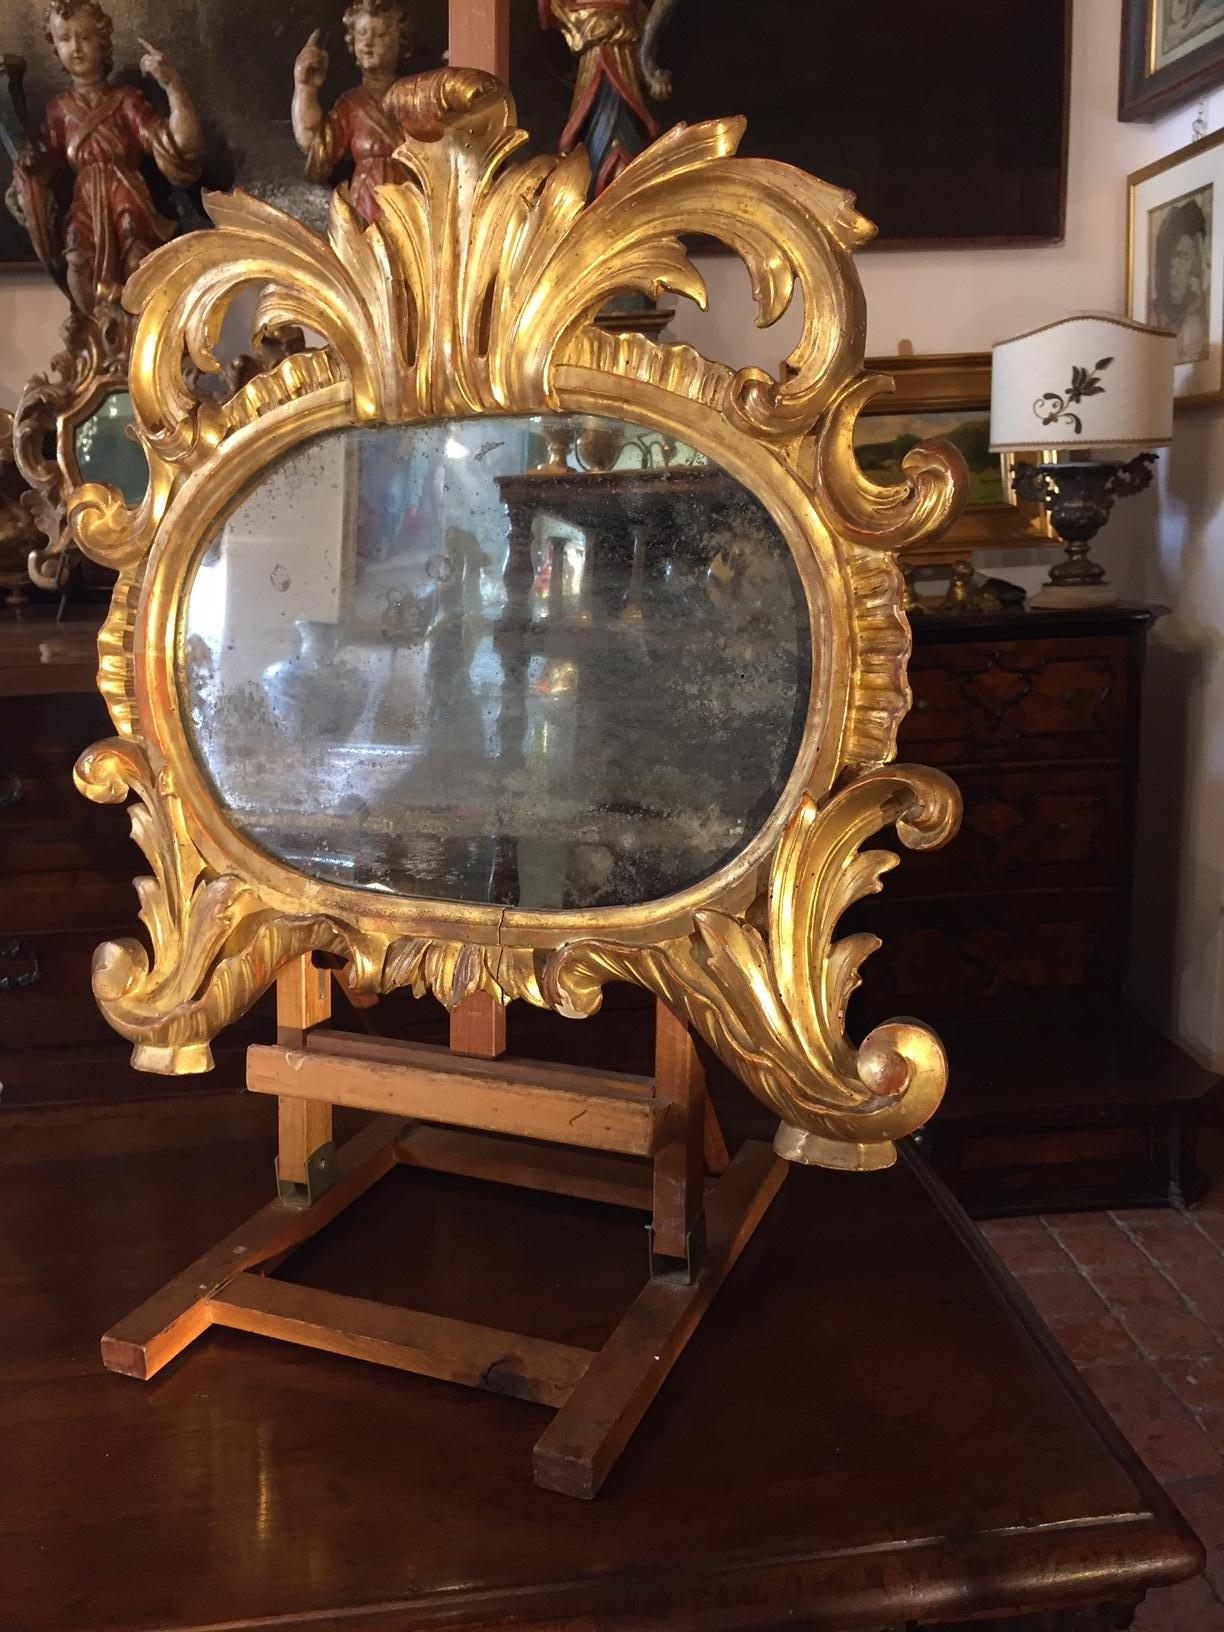 Specchiera Dorata 1750 circa in Legno di cirmolo Intagliato a volute e piedi a ricciolo, con lo specchio al mercurio d'epoca. Diese kleinen italienischen Exemplare wurden ursprünglich als Cartagloria, als von Hand eingearbeitete und verschnörkelte